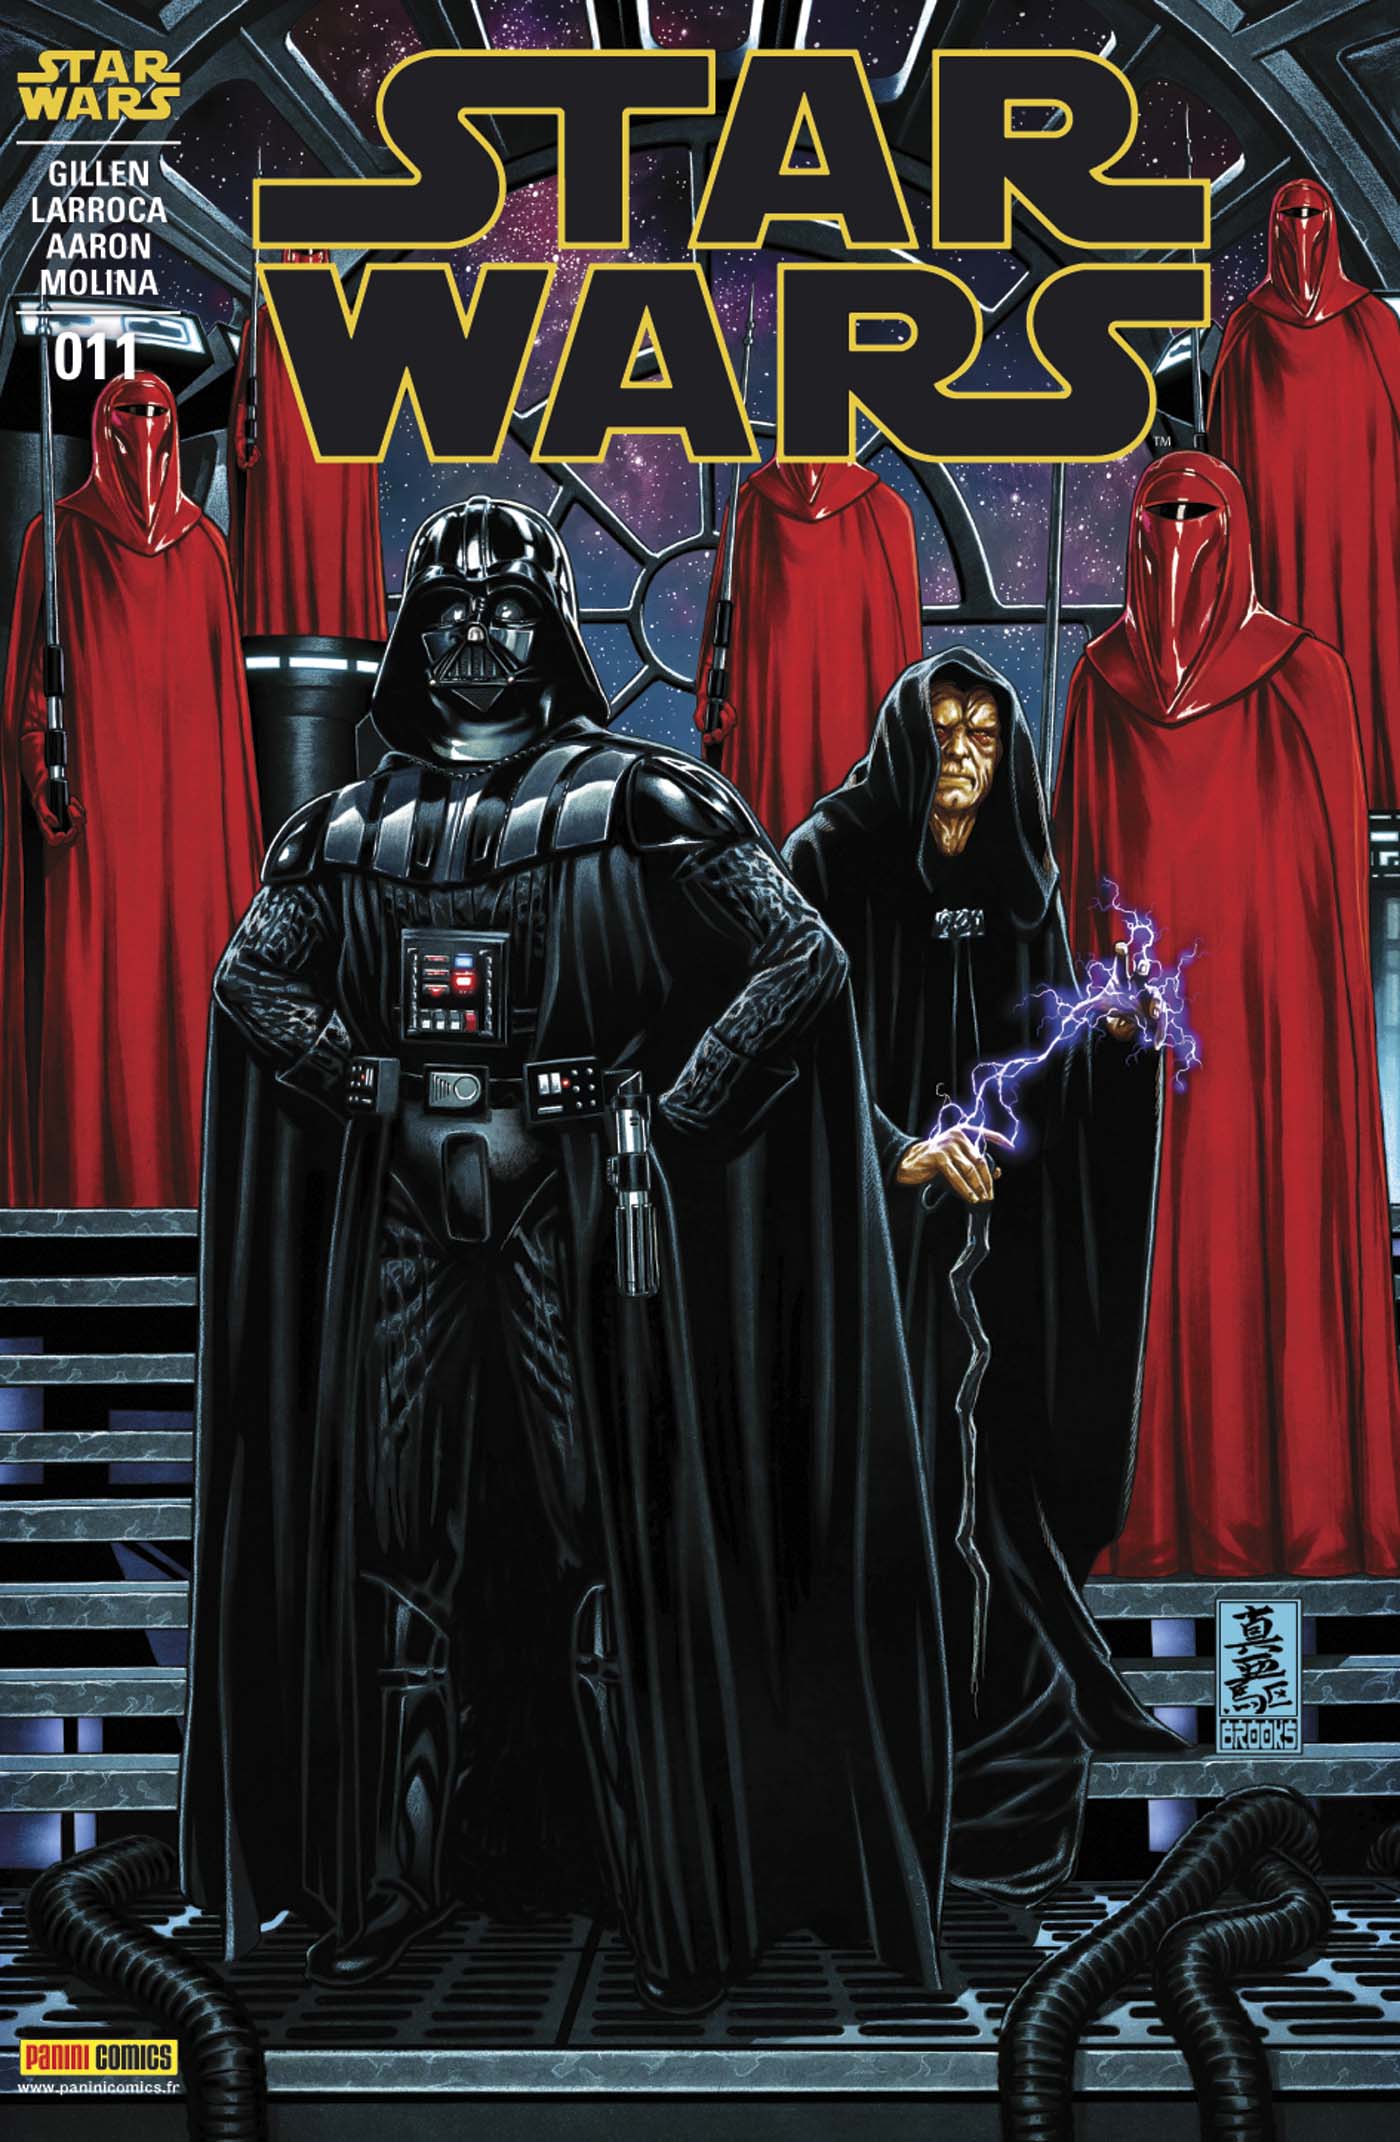 Star Wars Comics 11 - Couverture A